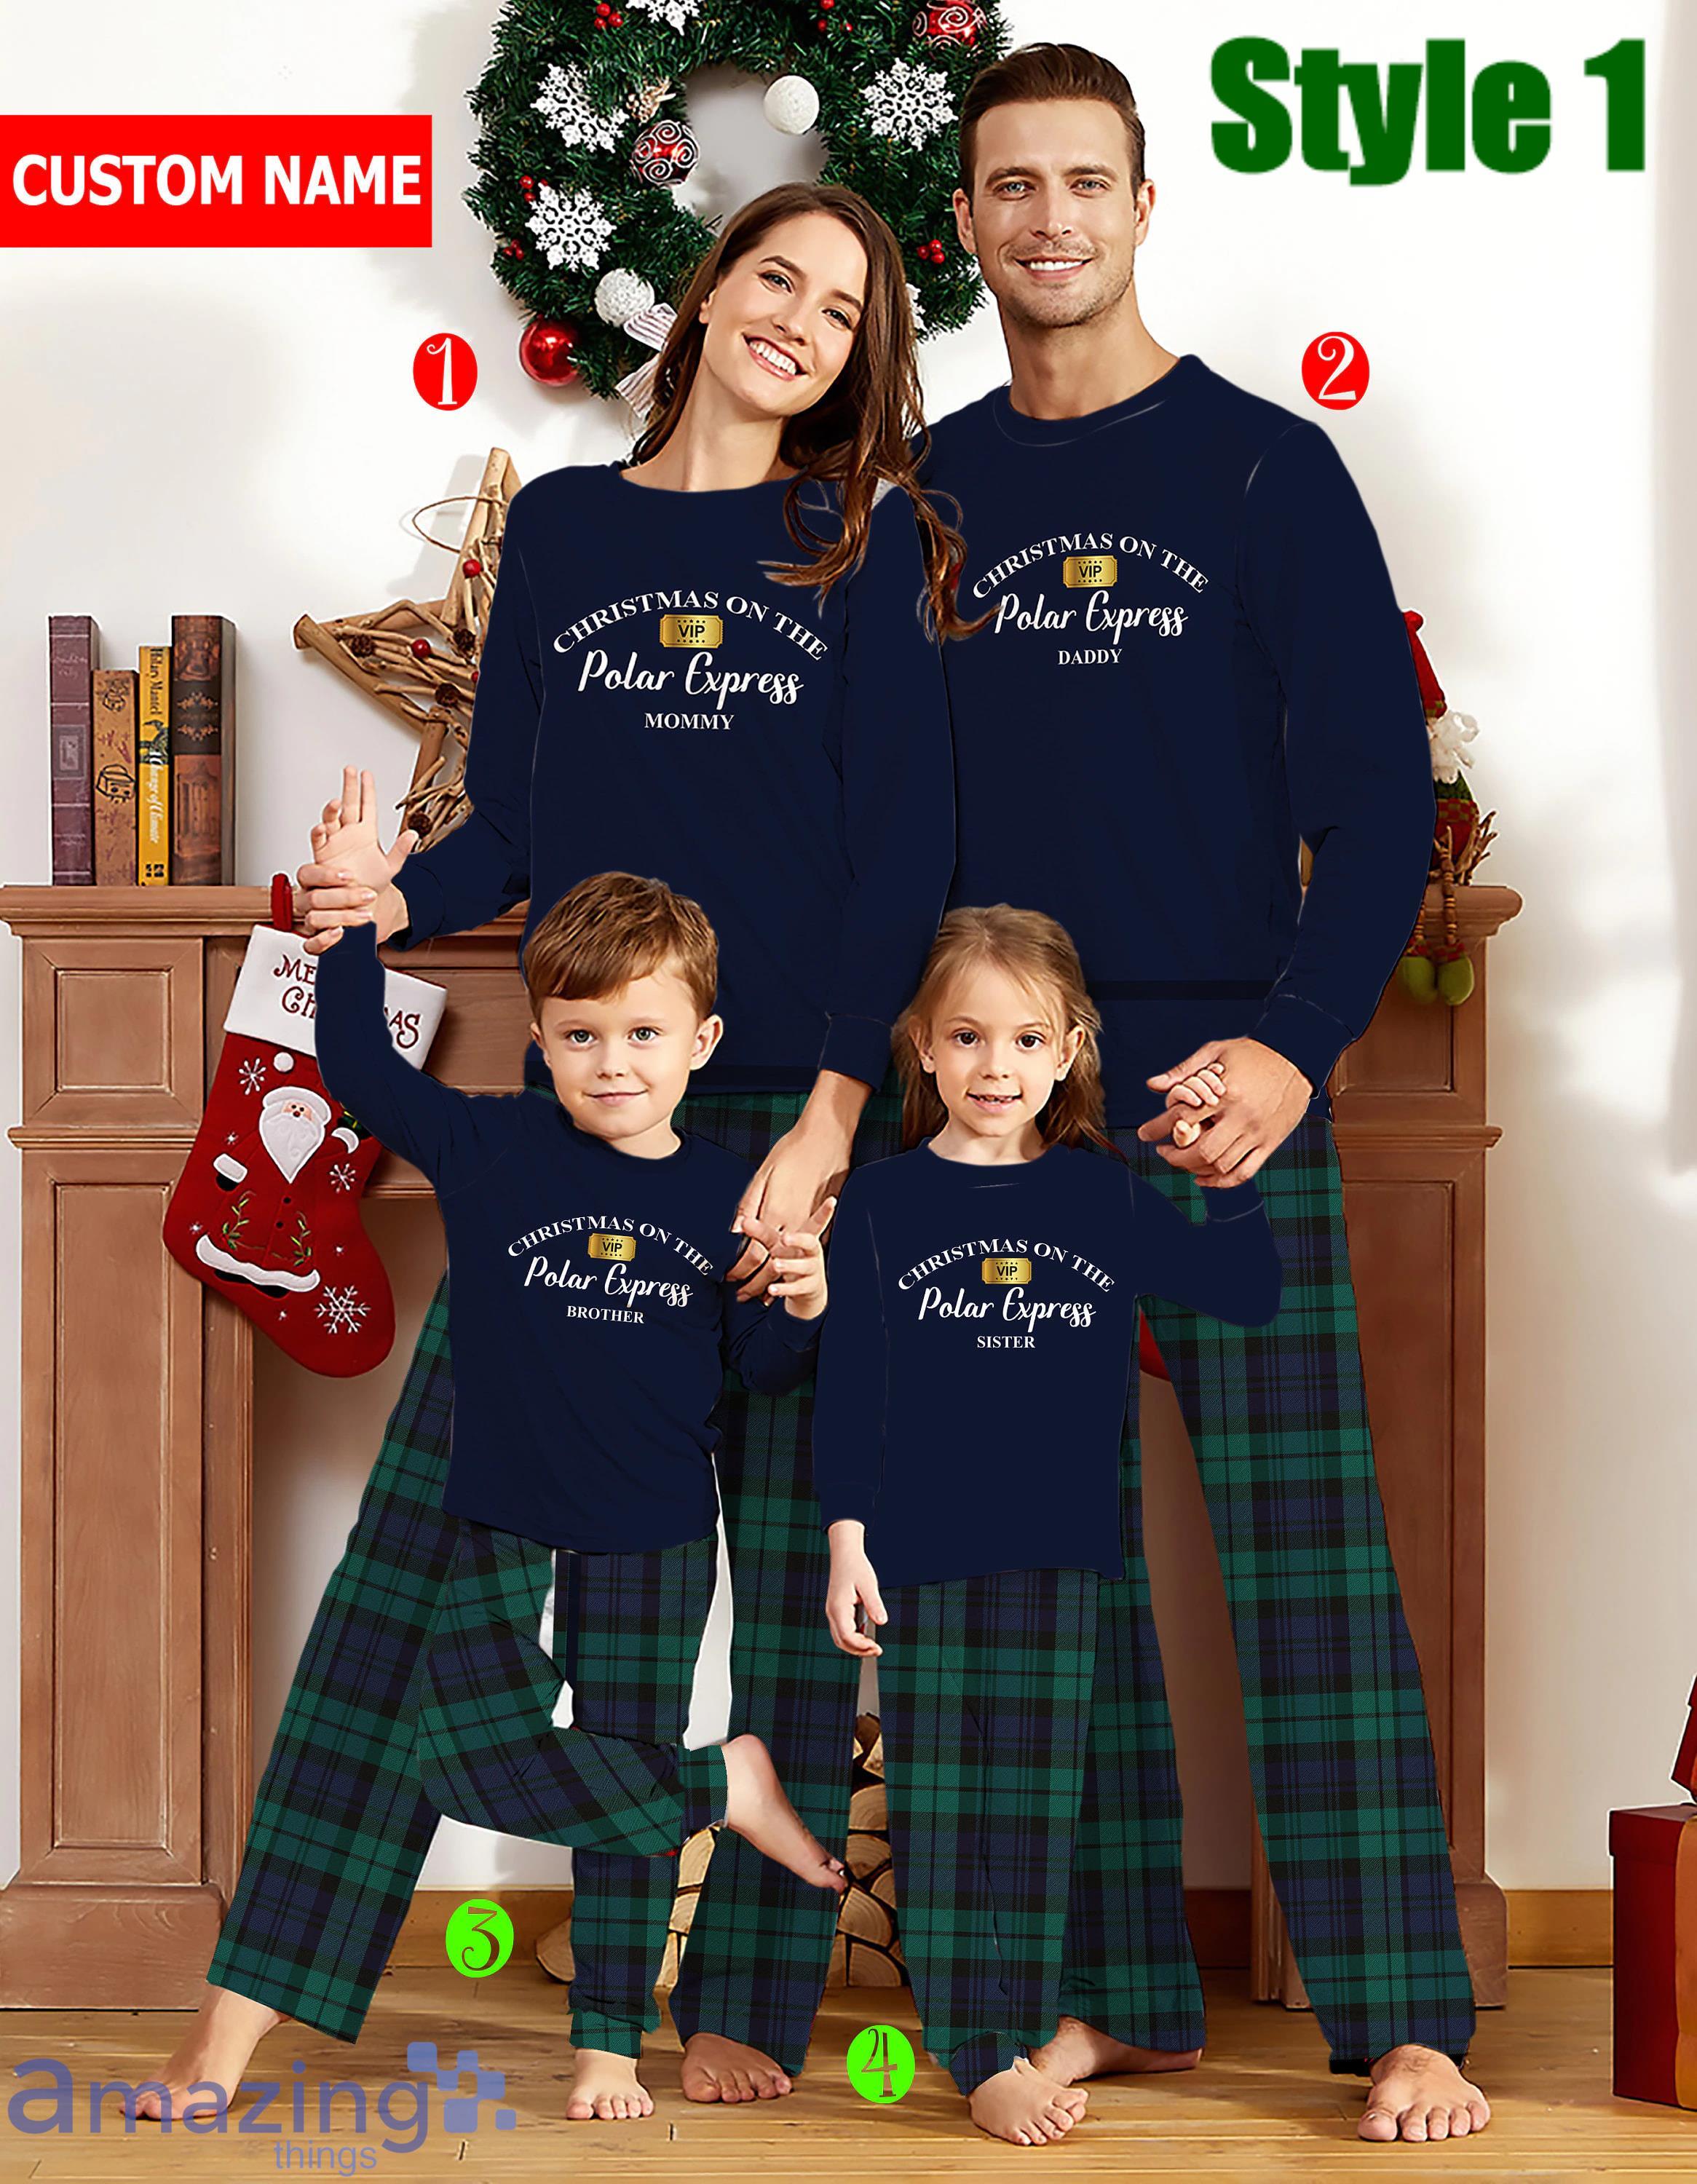 Custom Name Christmas One The Vip Polar Express Matching Family Pajamas Product Photo 1